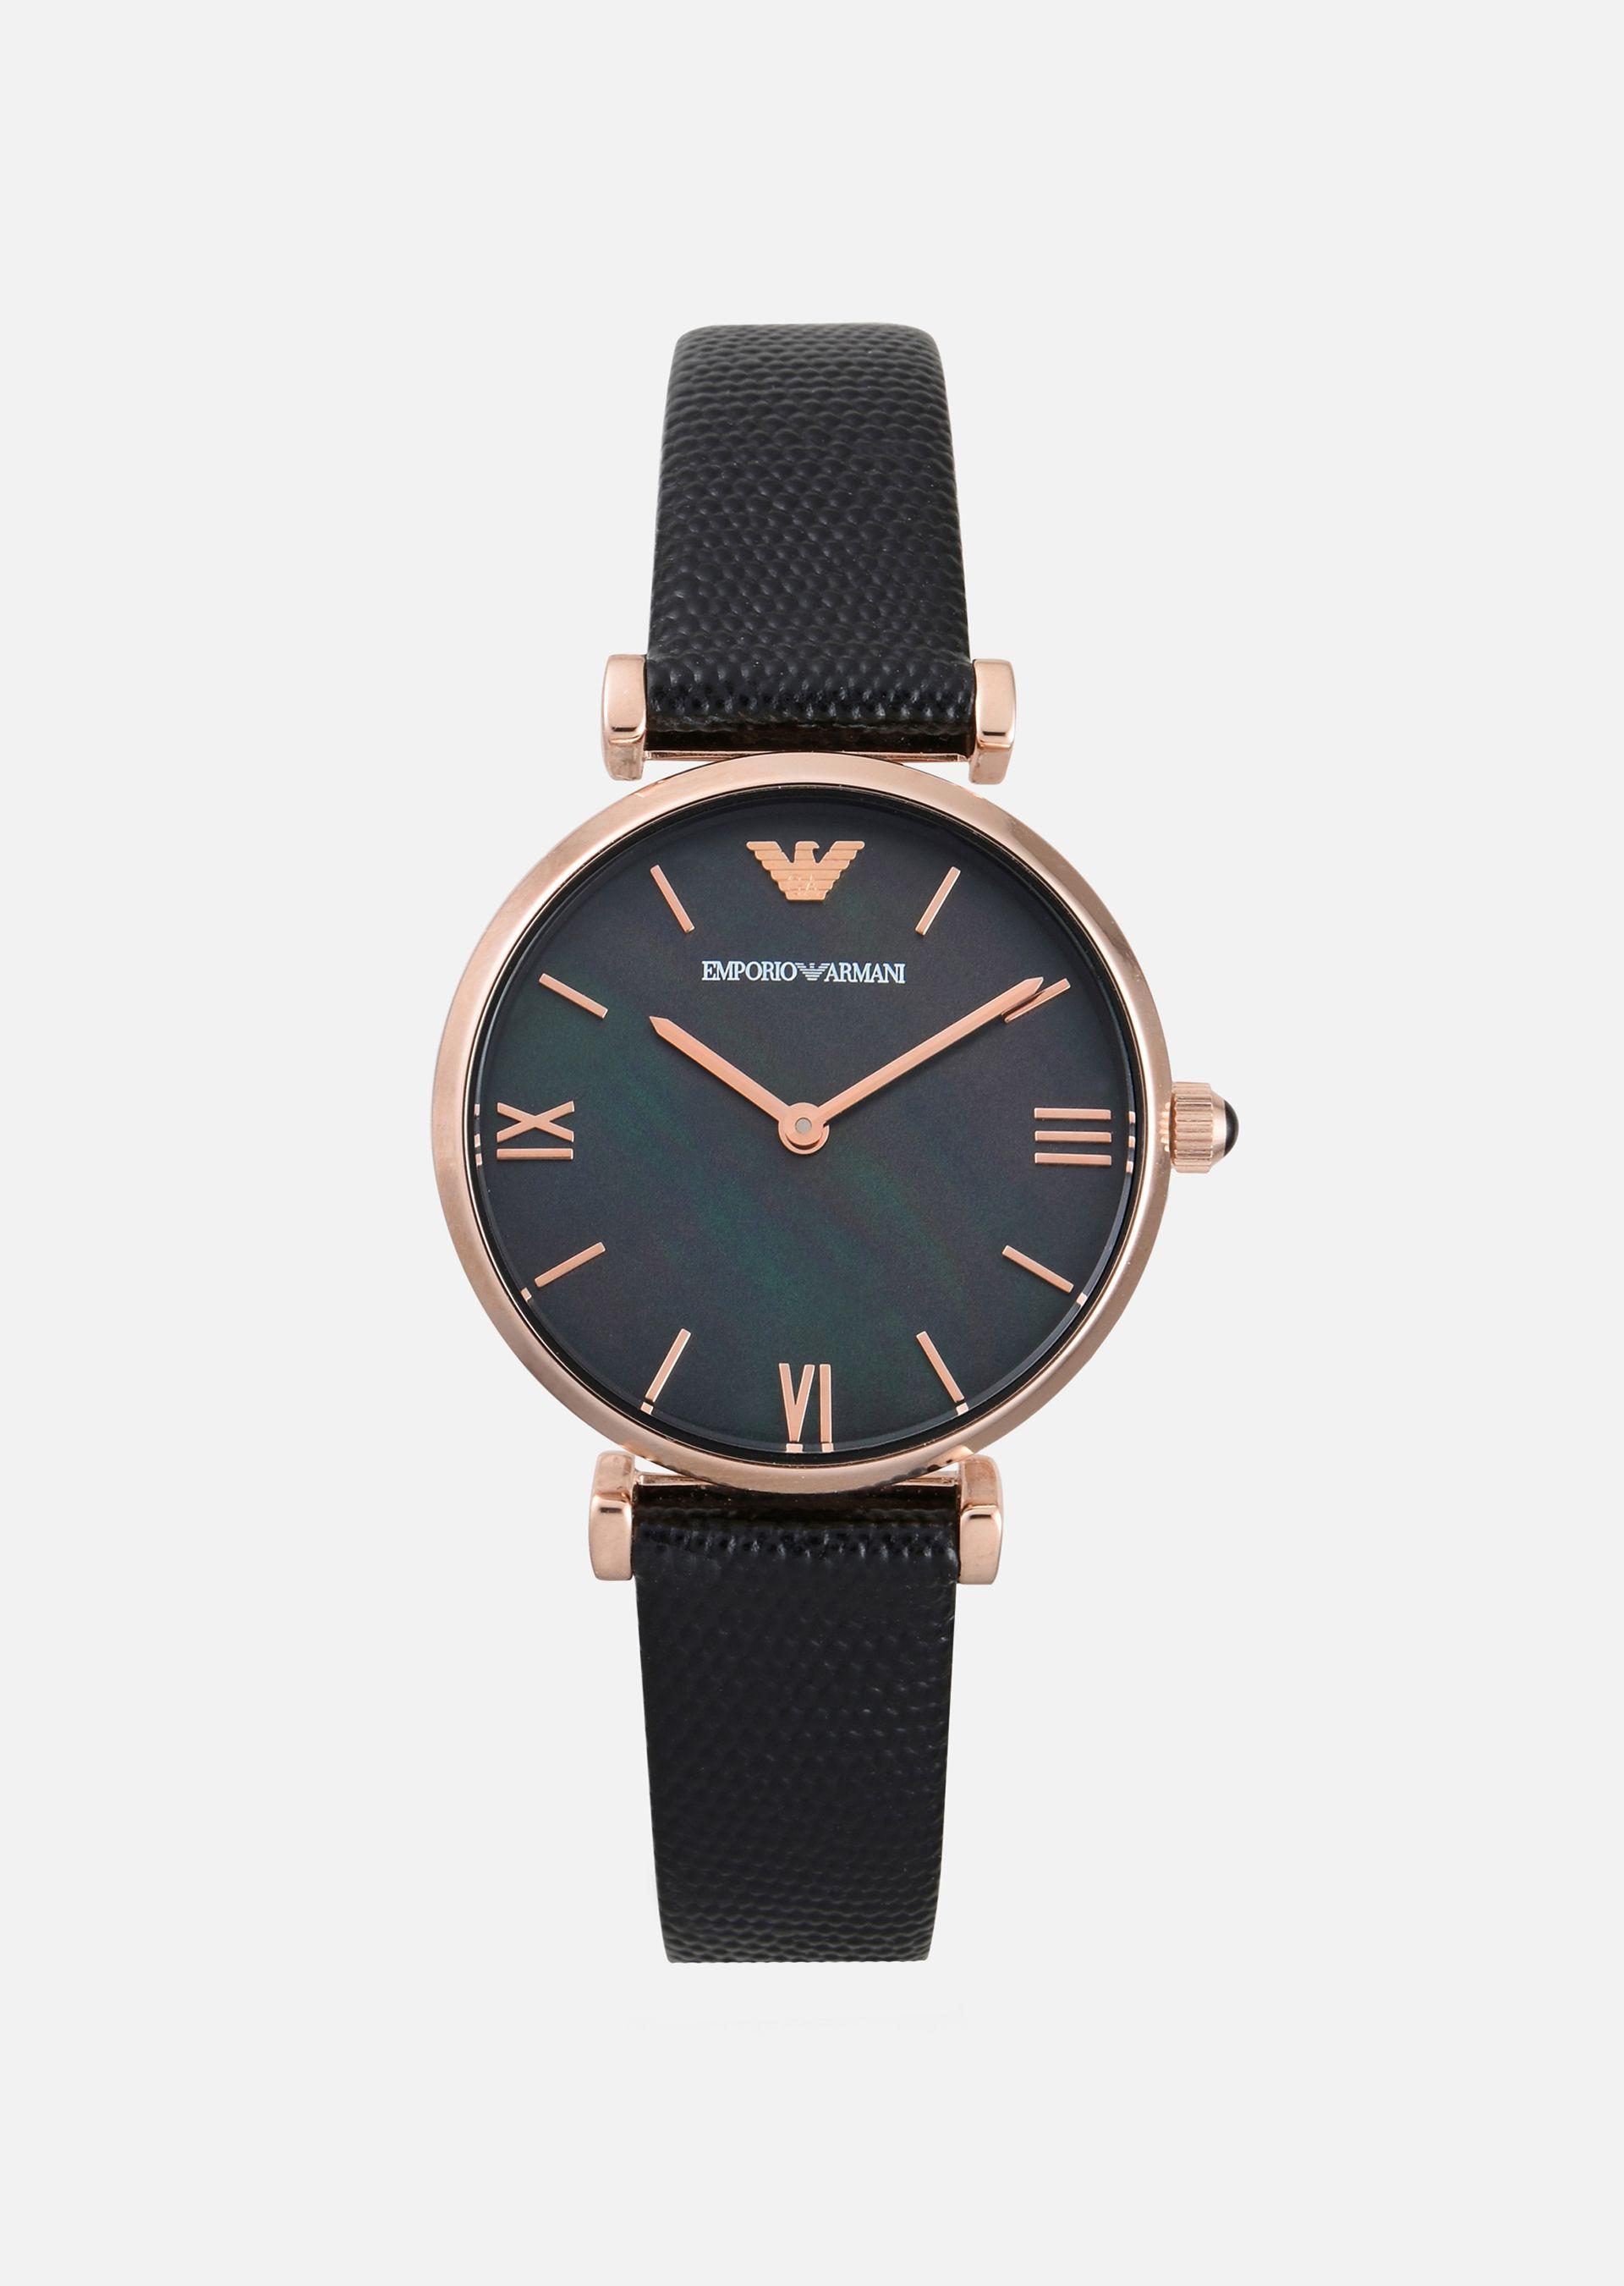 emporio armani black leather watch,OFF 62%,www.concordehotels.com.tr